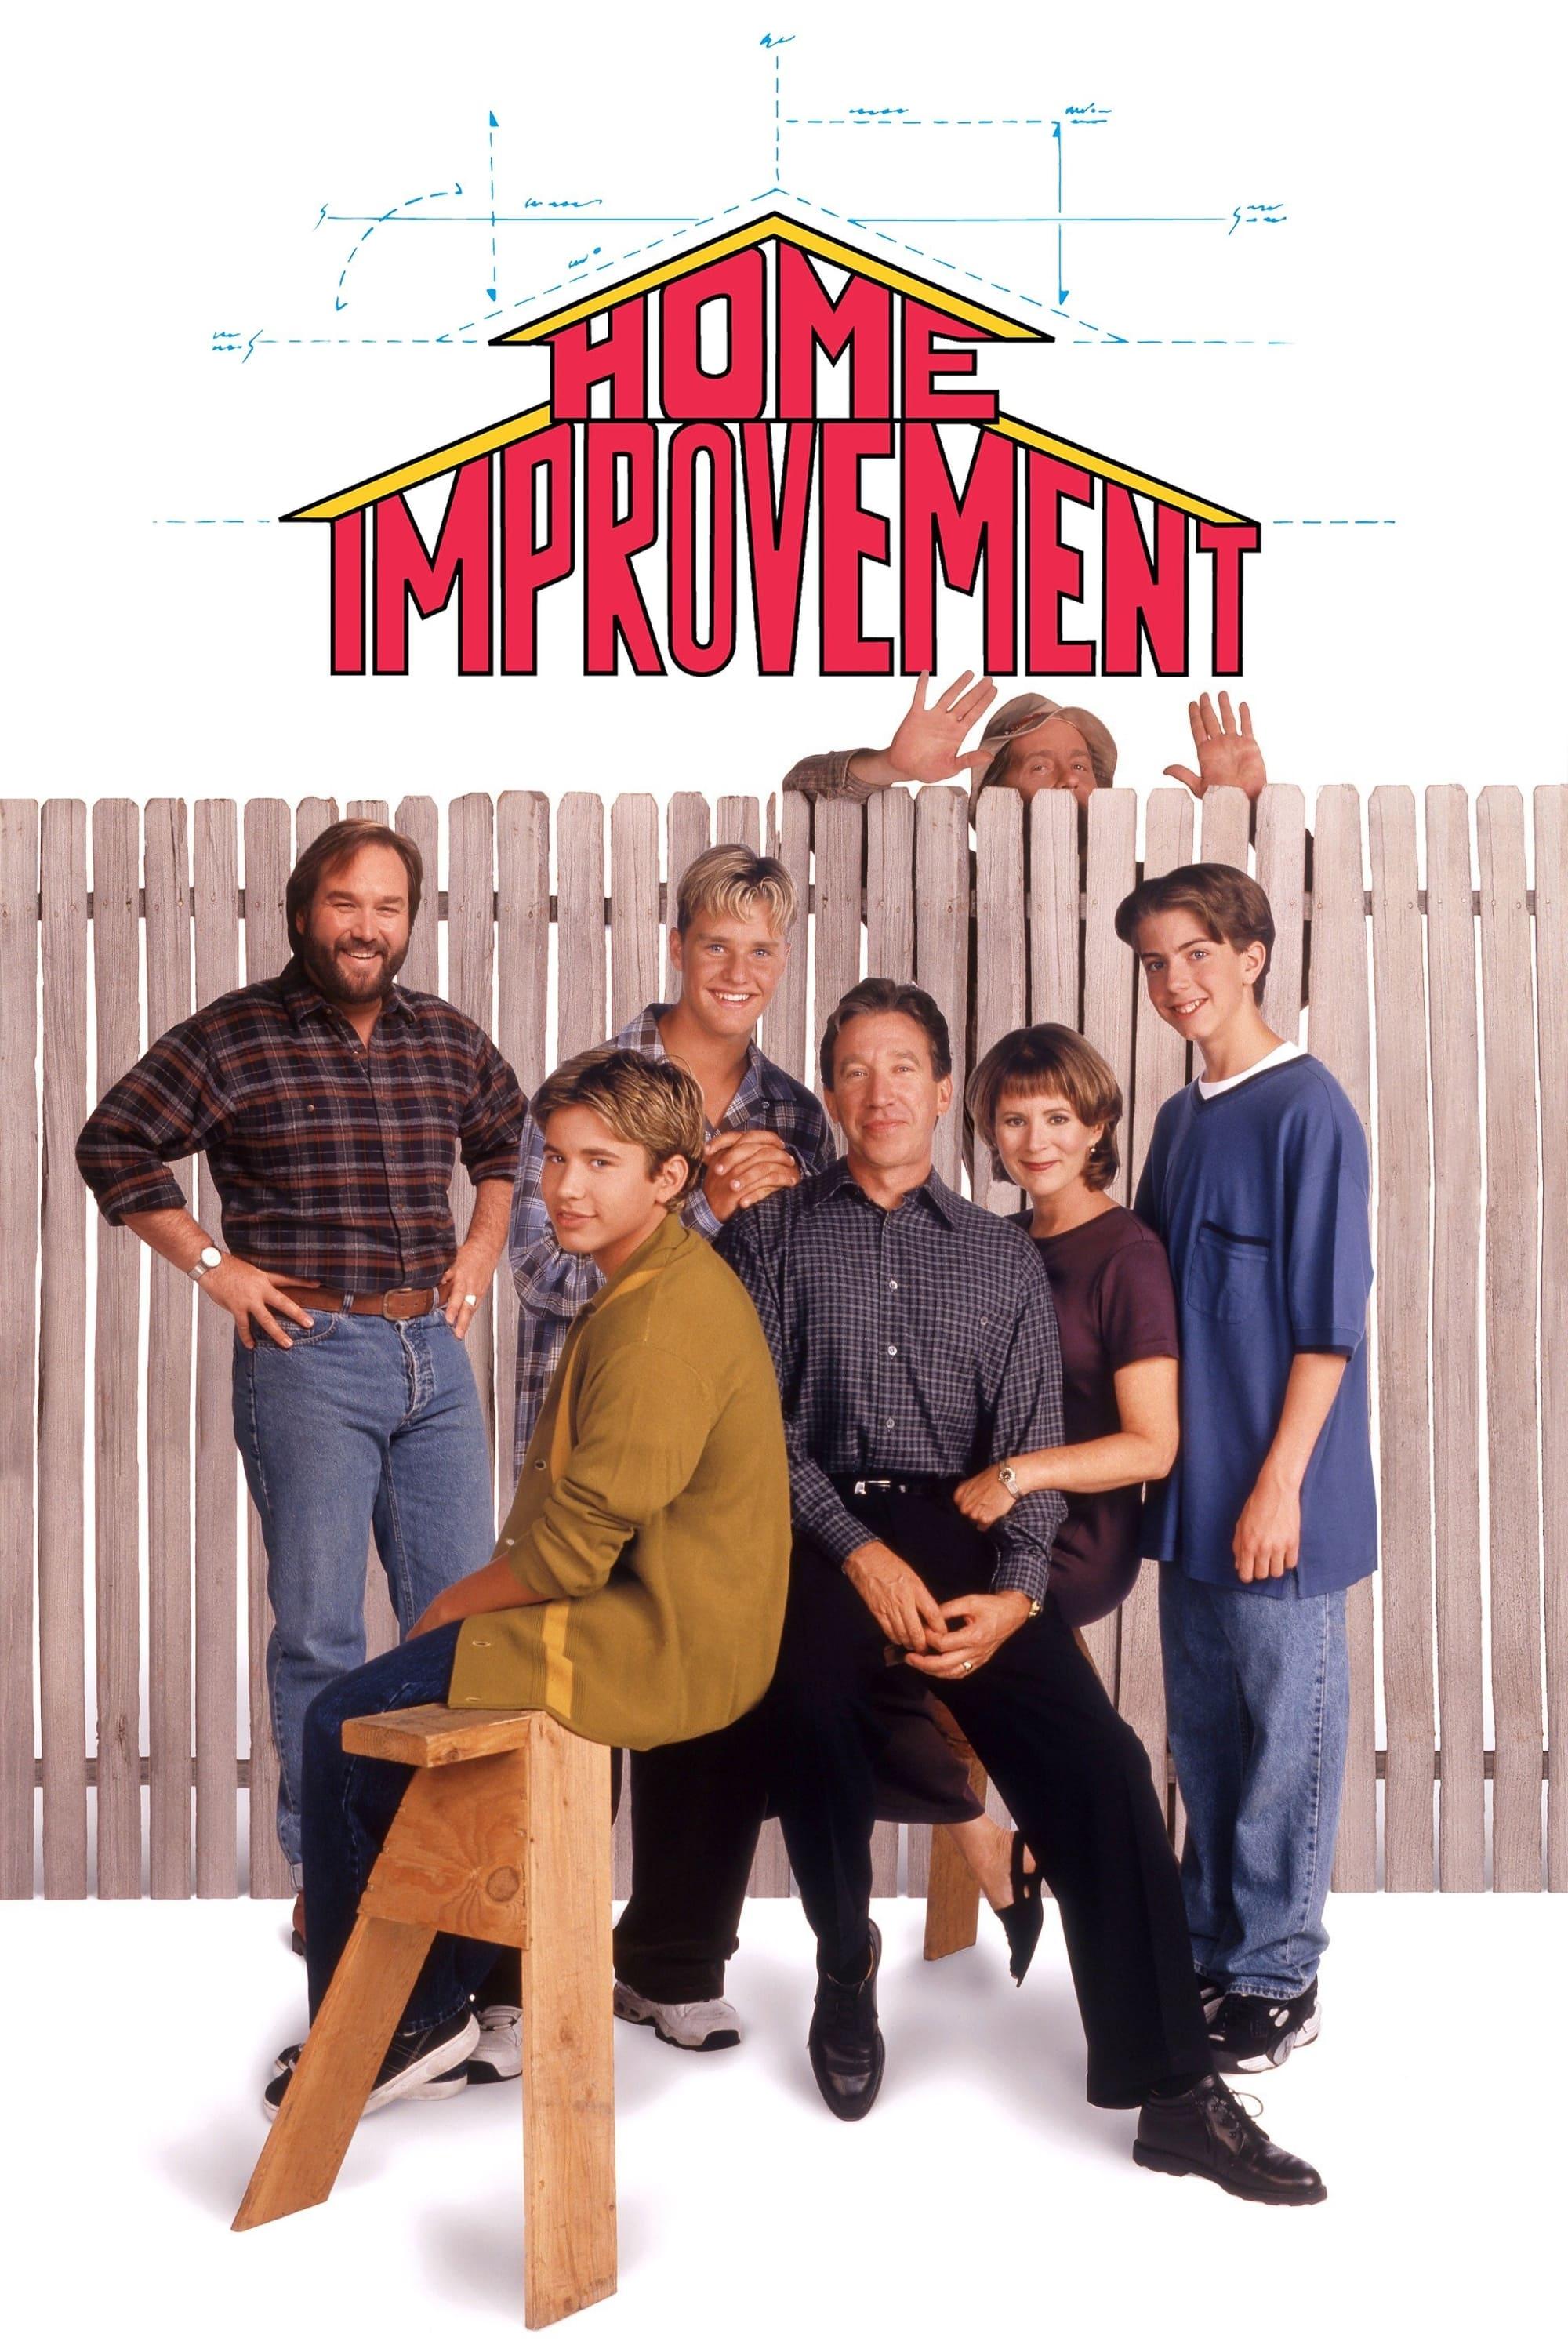 Home Improvement poster